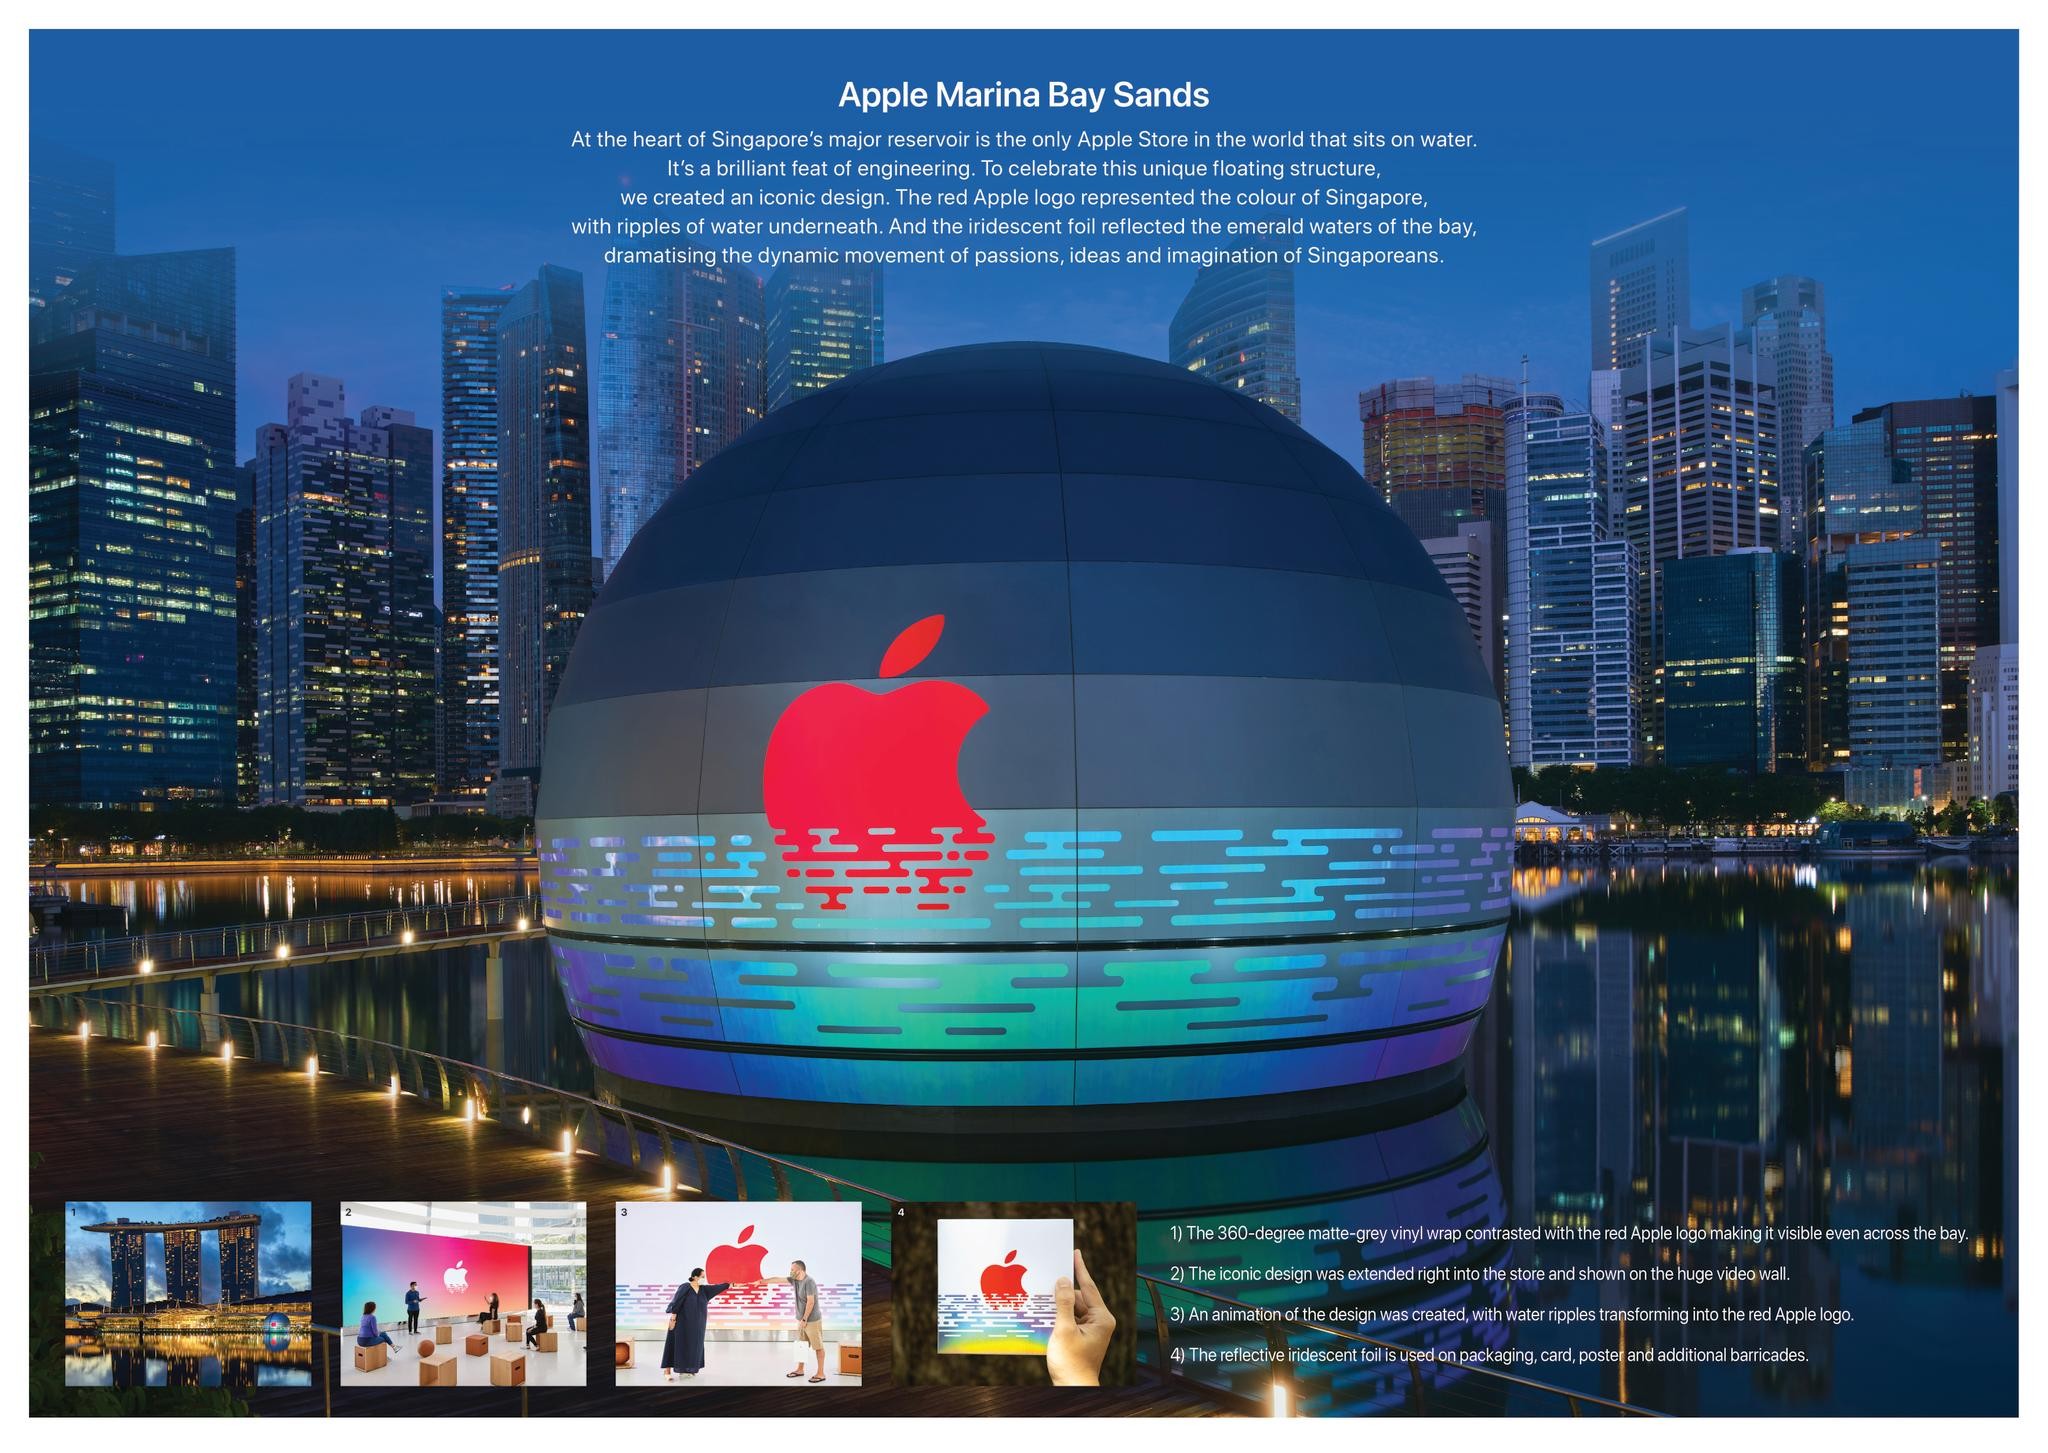 Apple Store Opening: Marina Bay Sands